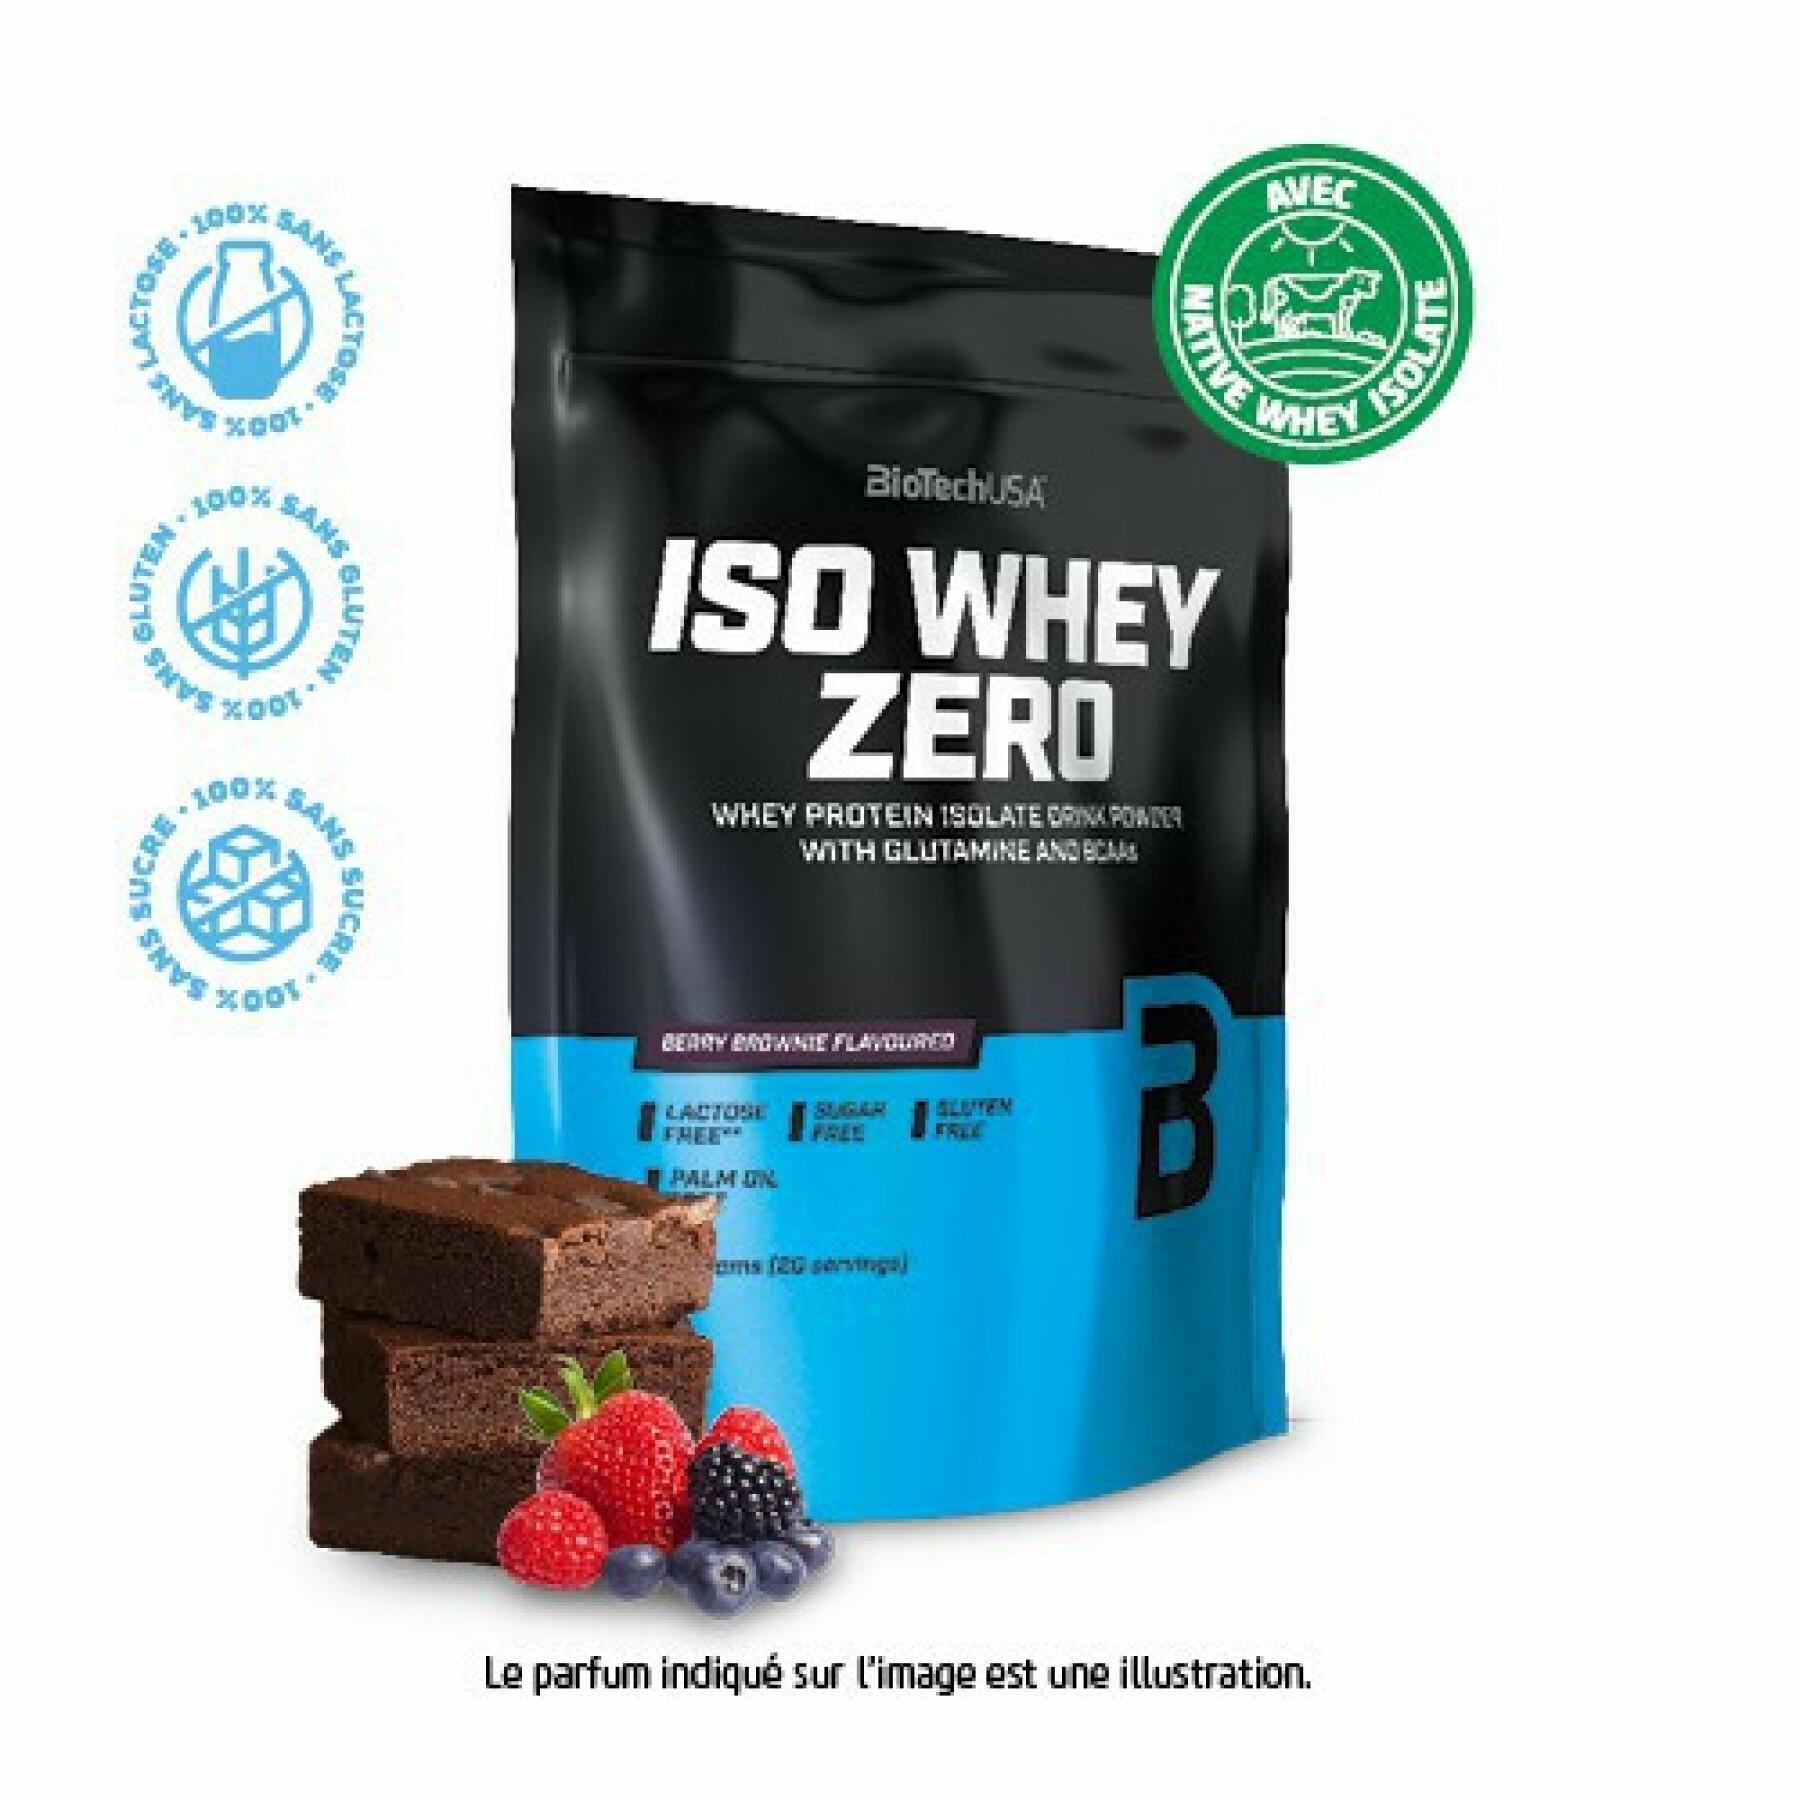 Pak van 10 zakjes proteïne Biotech USA iso whey zero lactose free - Brownie aux fruits rouges - 500g